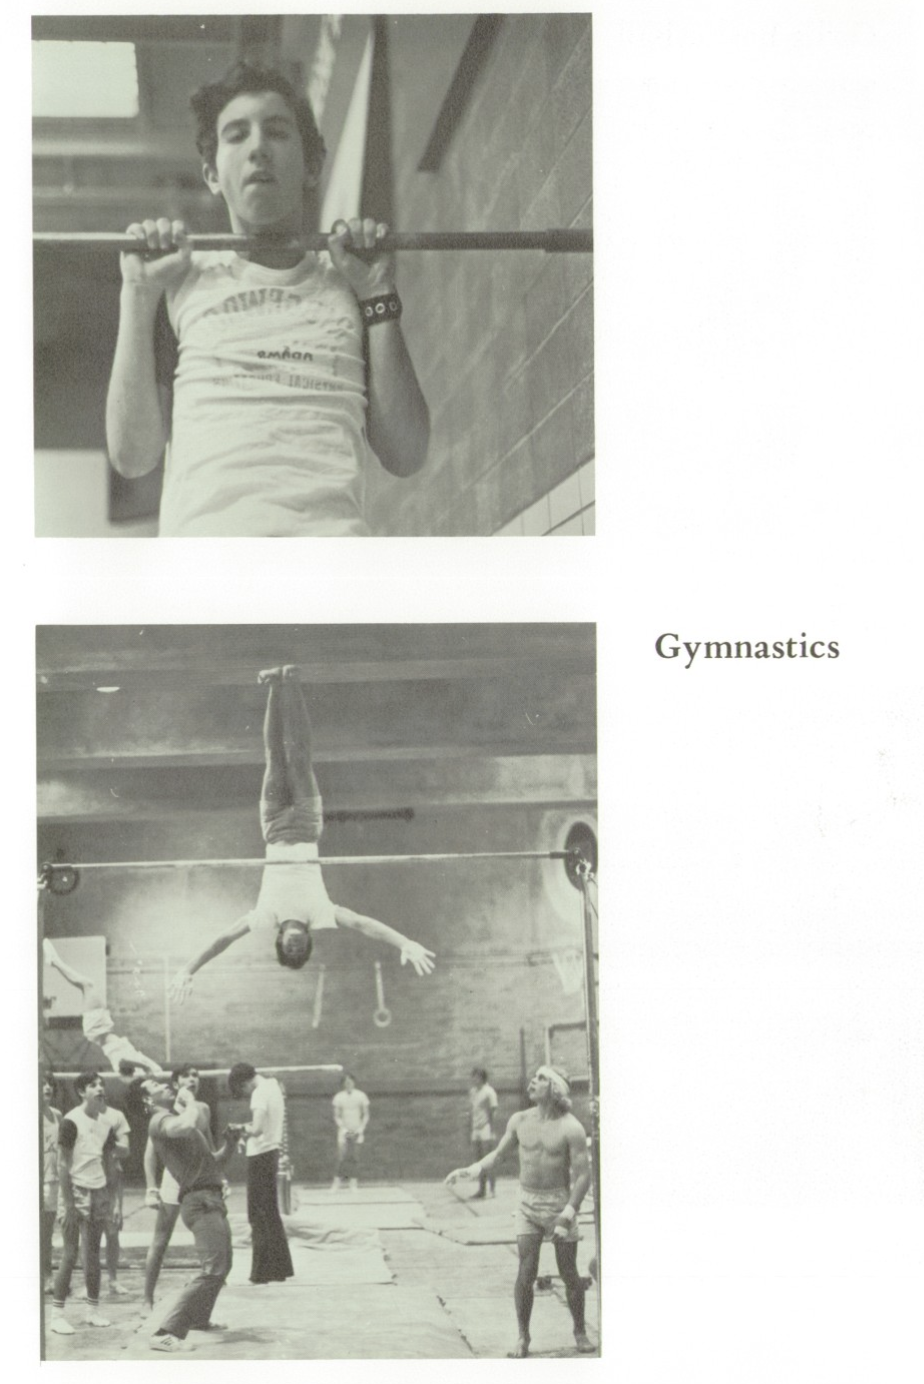 1971 Boys’ Gymnastics Team